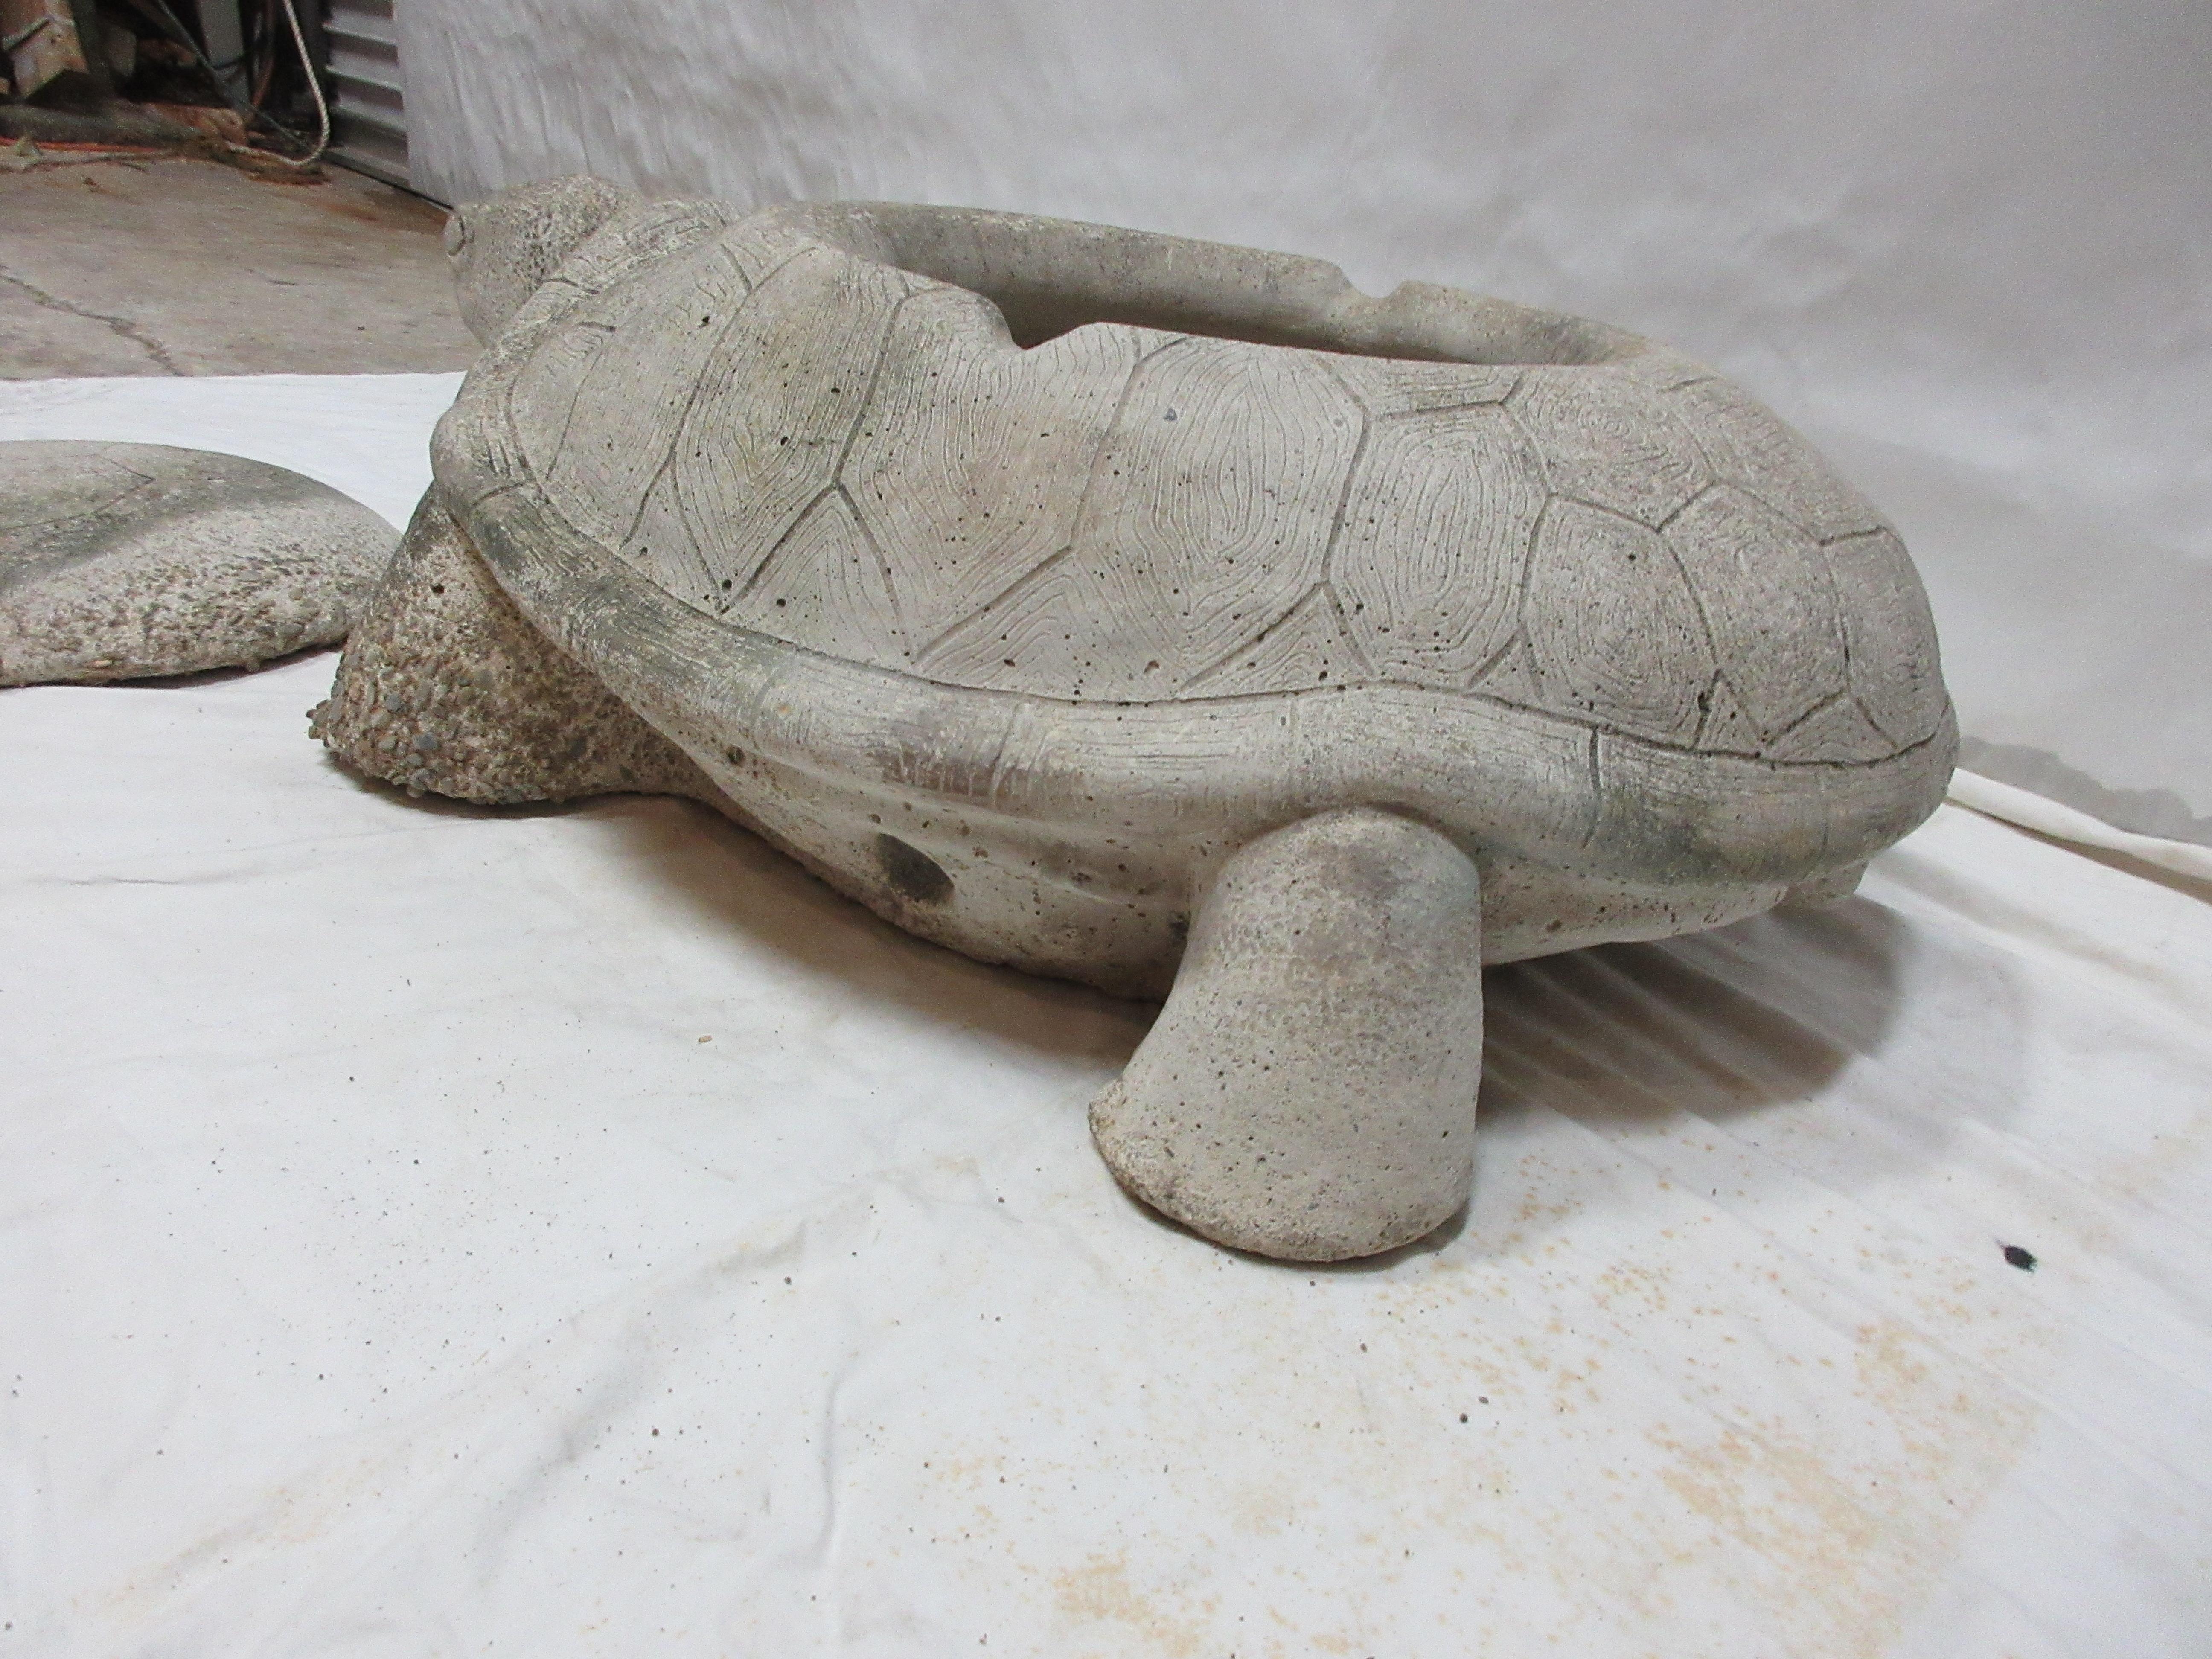  Garden Turtle For Sale 5